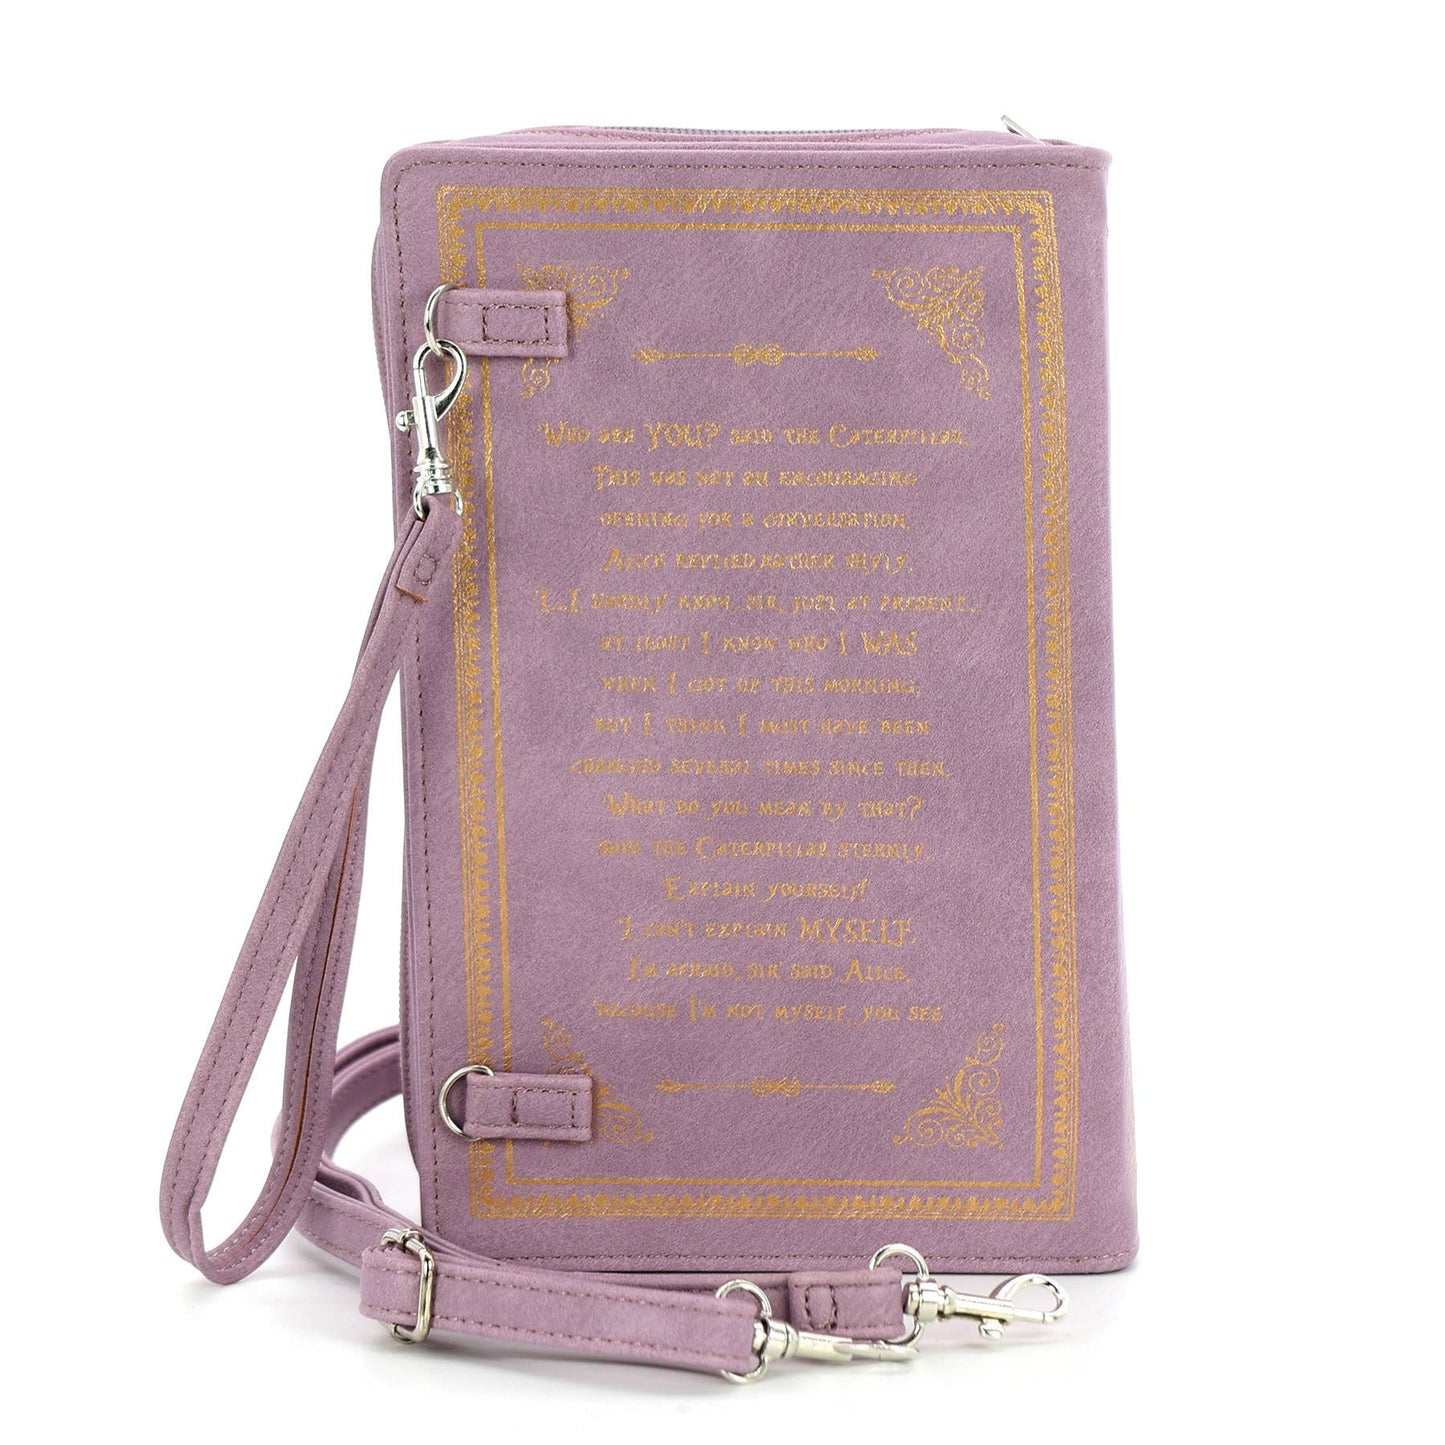 Alice in Wonderland Book Clutch Bag